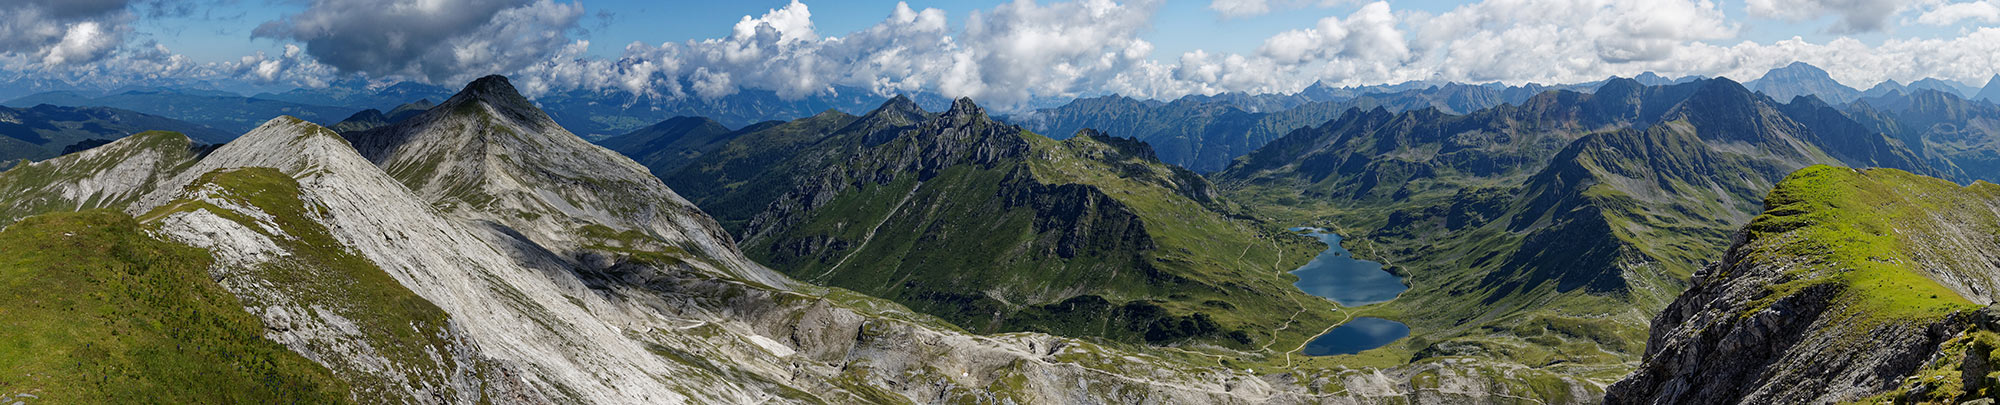 Bergtouren - Wanderungen - Reiseberichte - Fotografie – www.ksuppan.at